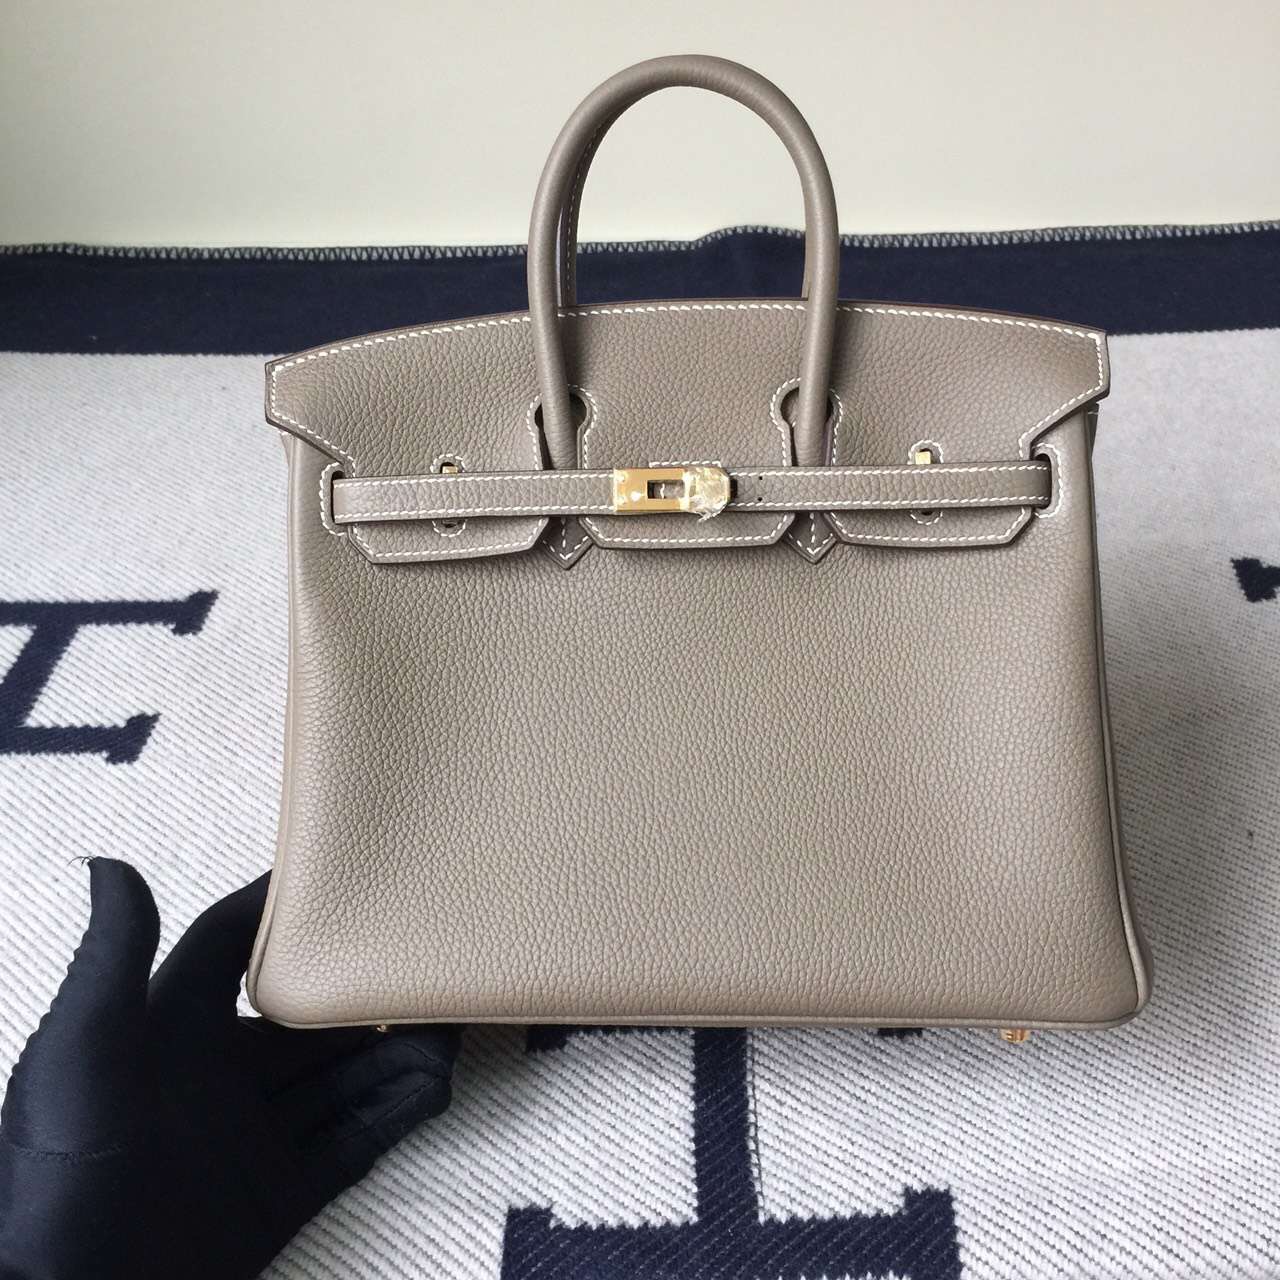 Wholesale Hermes C81 Etoupe Grey Togo Leather Birkin Bag 25cm